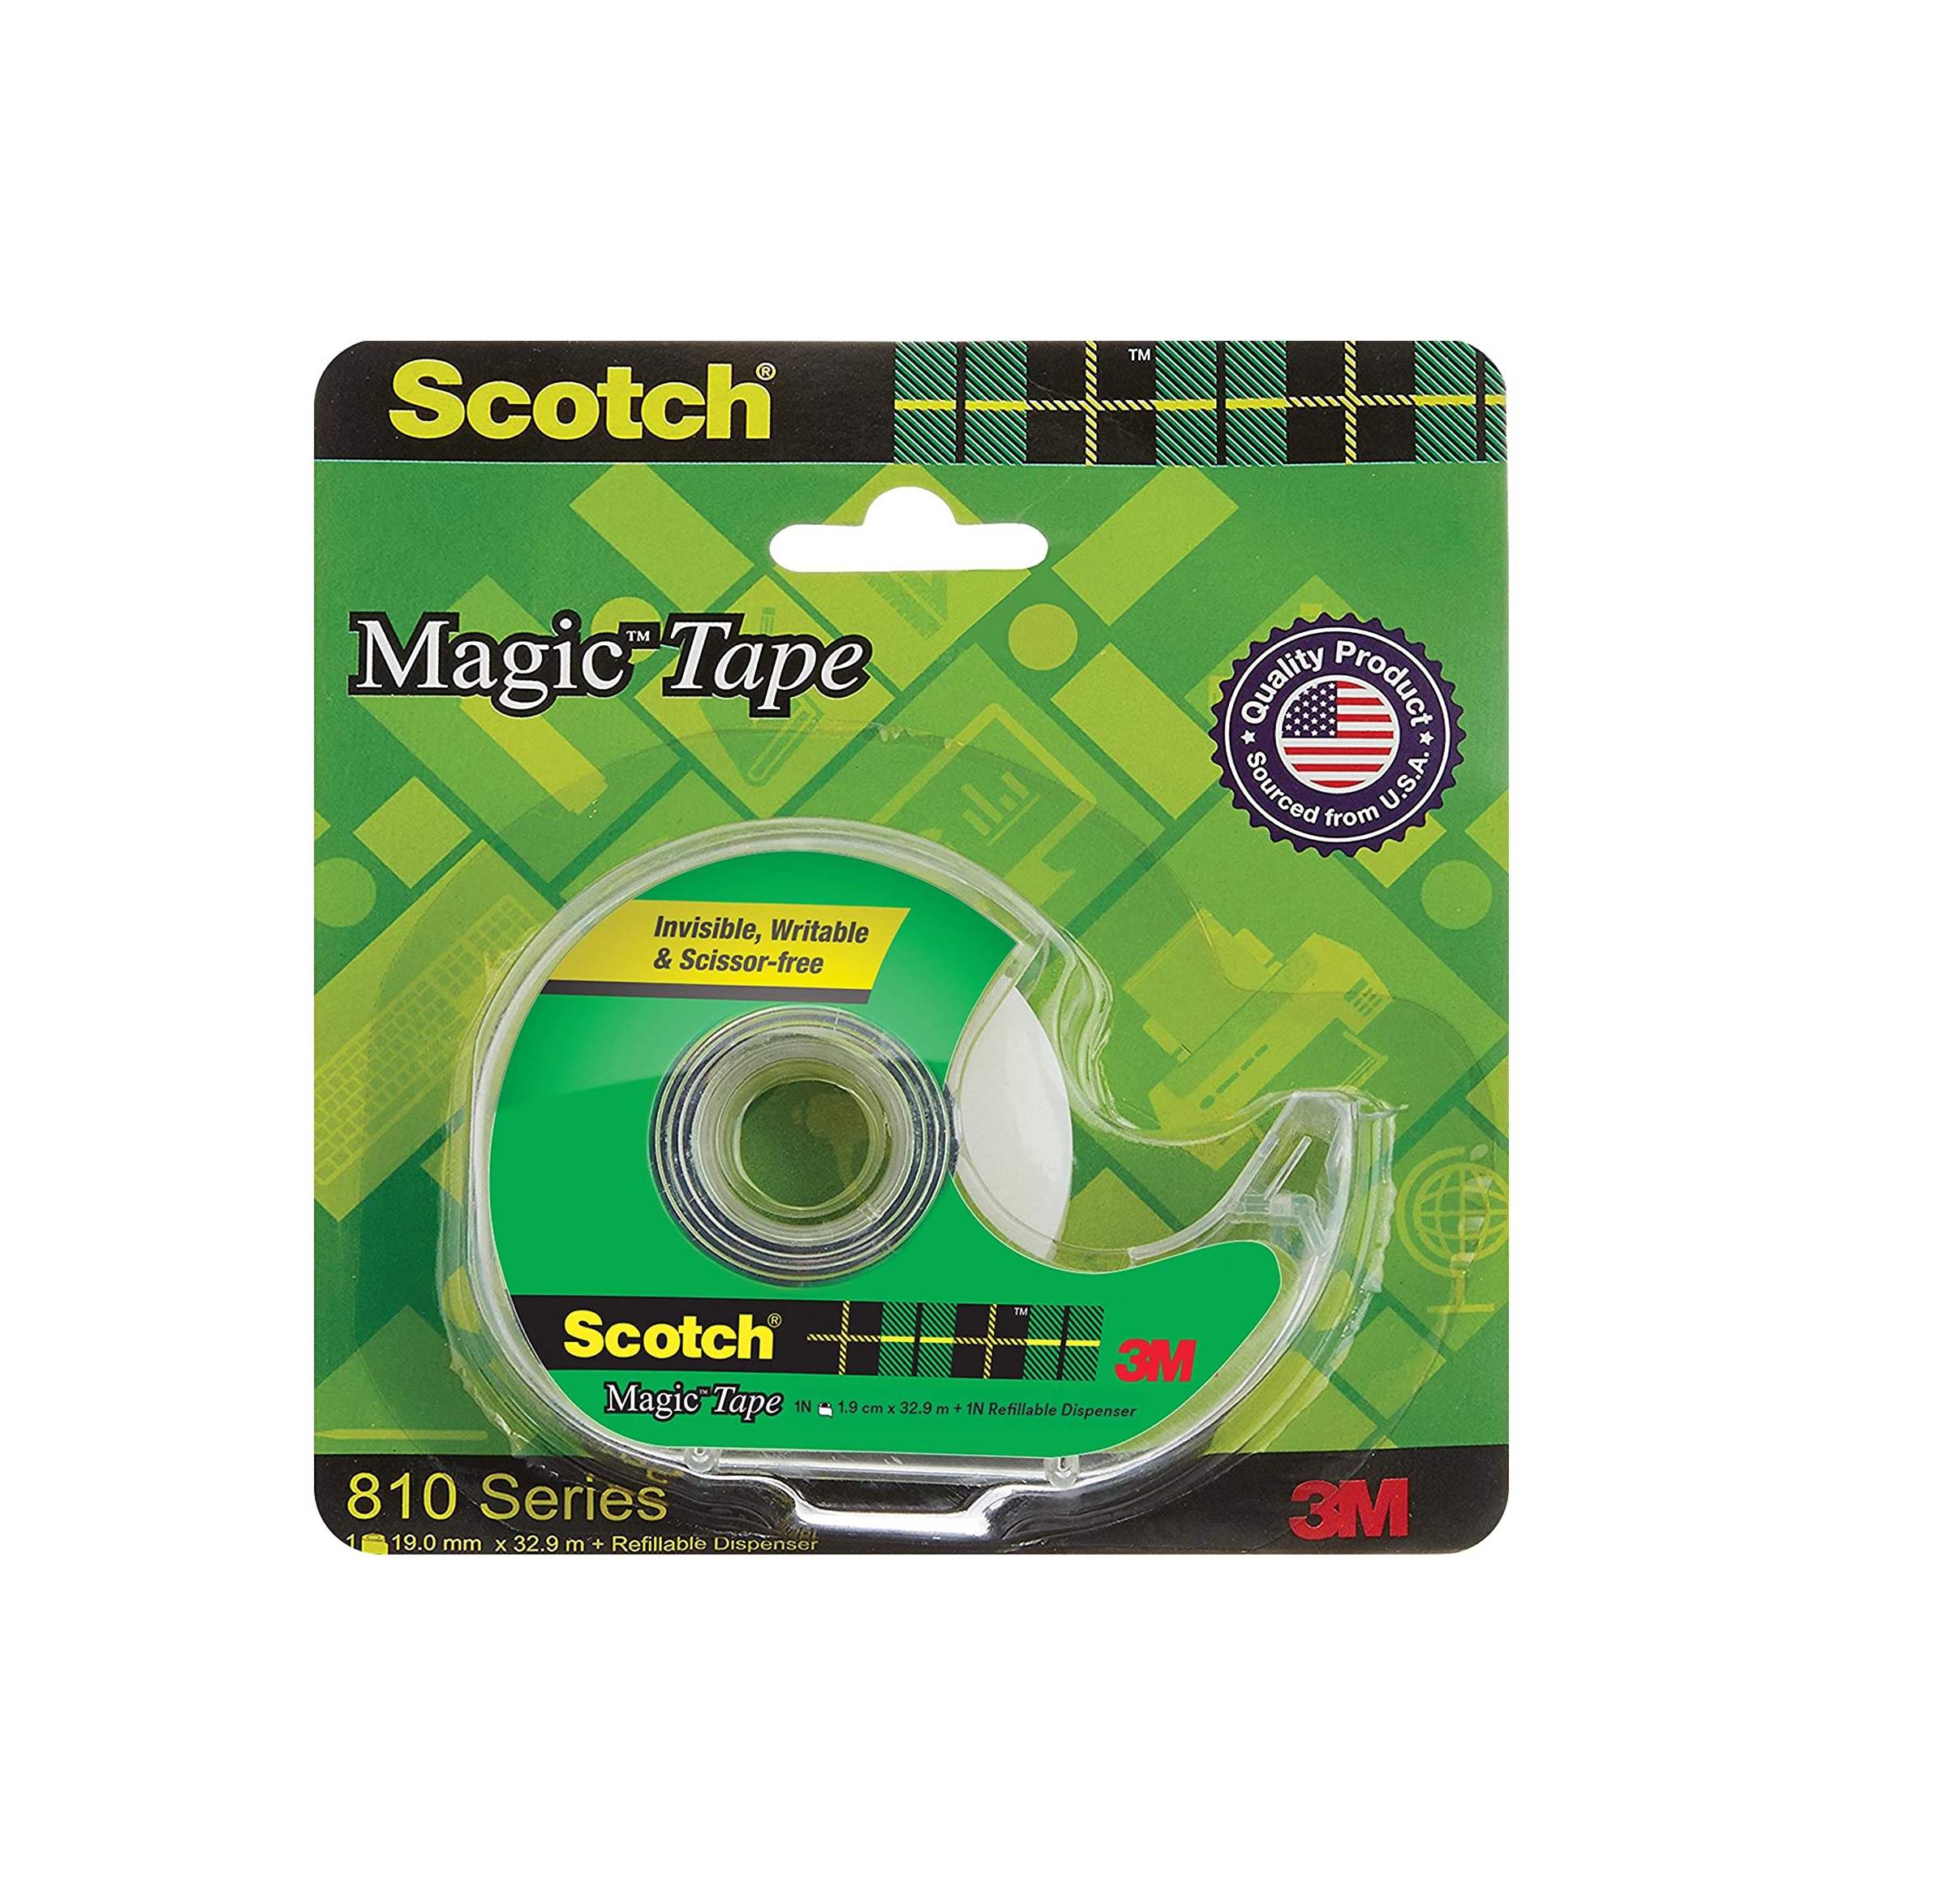 Scotch Magic Tape - The Original Matte-Finish Invisible Tape by 3M